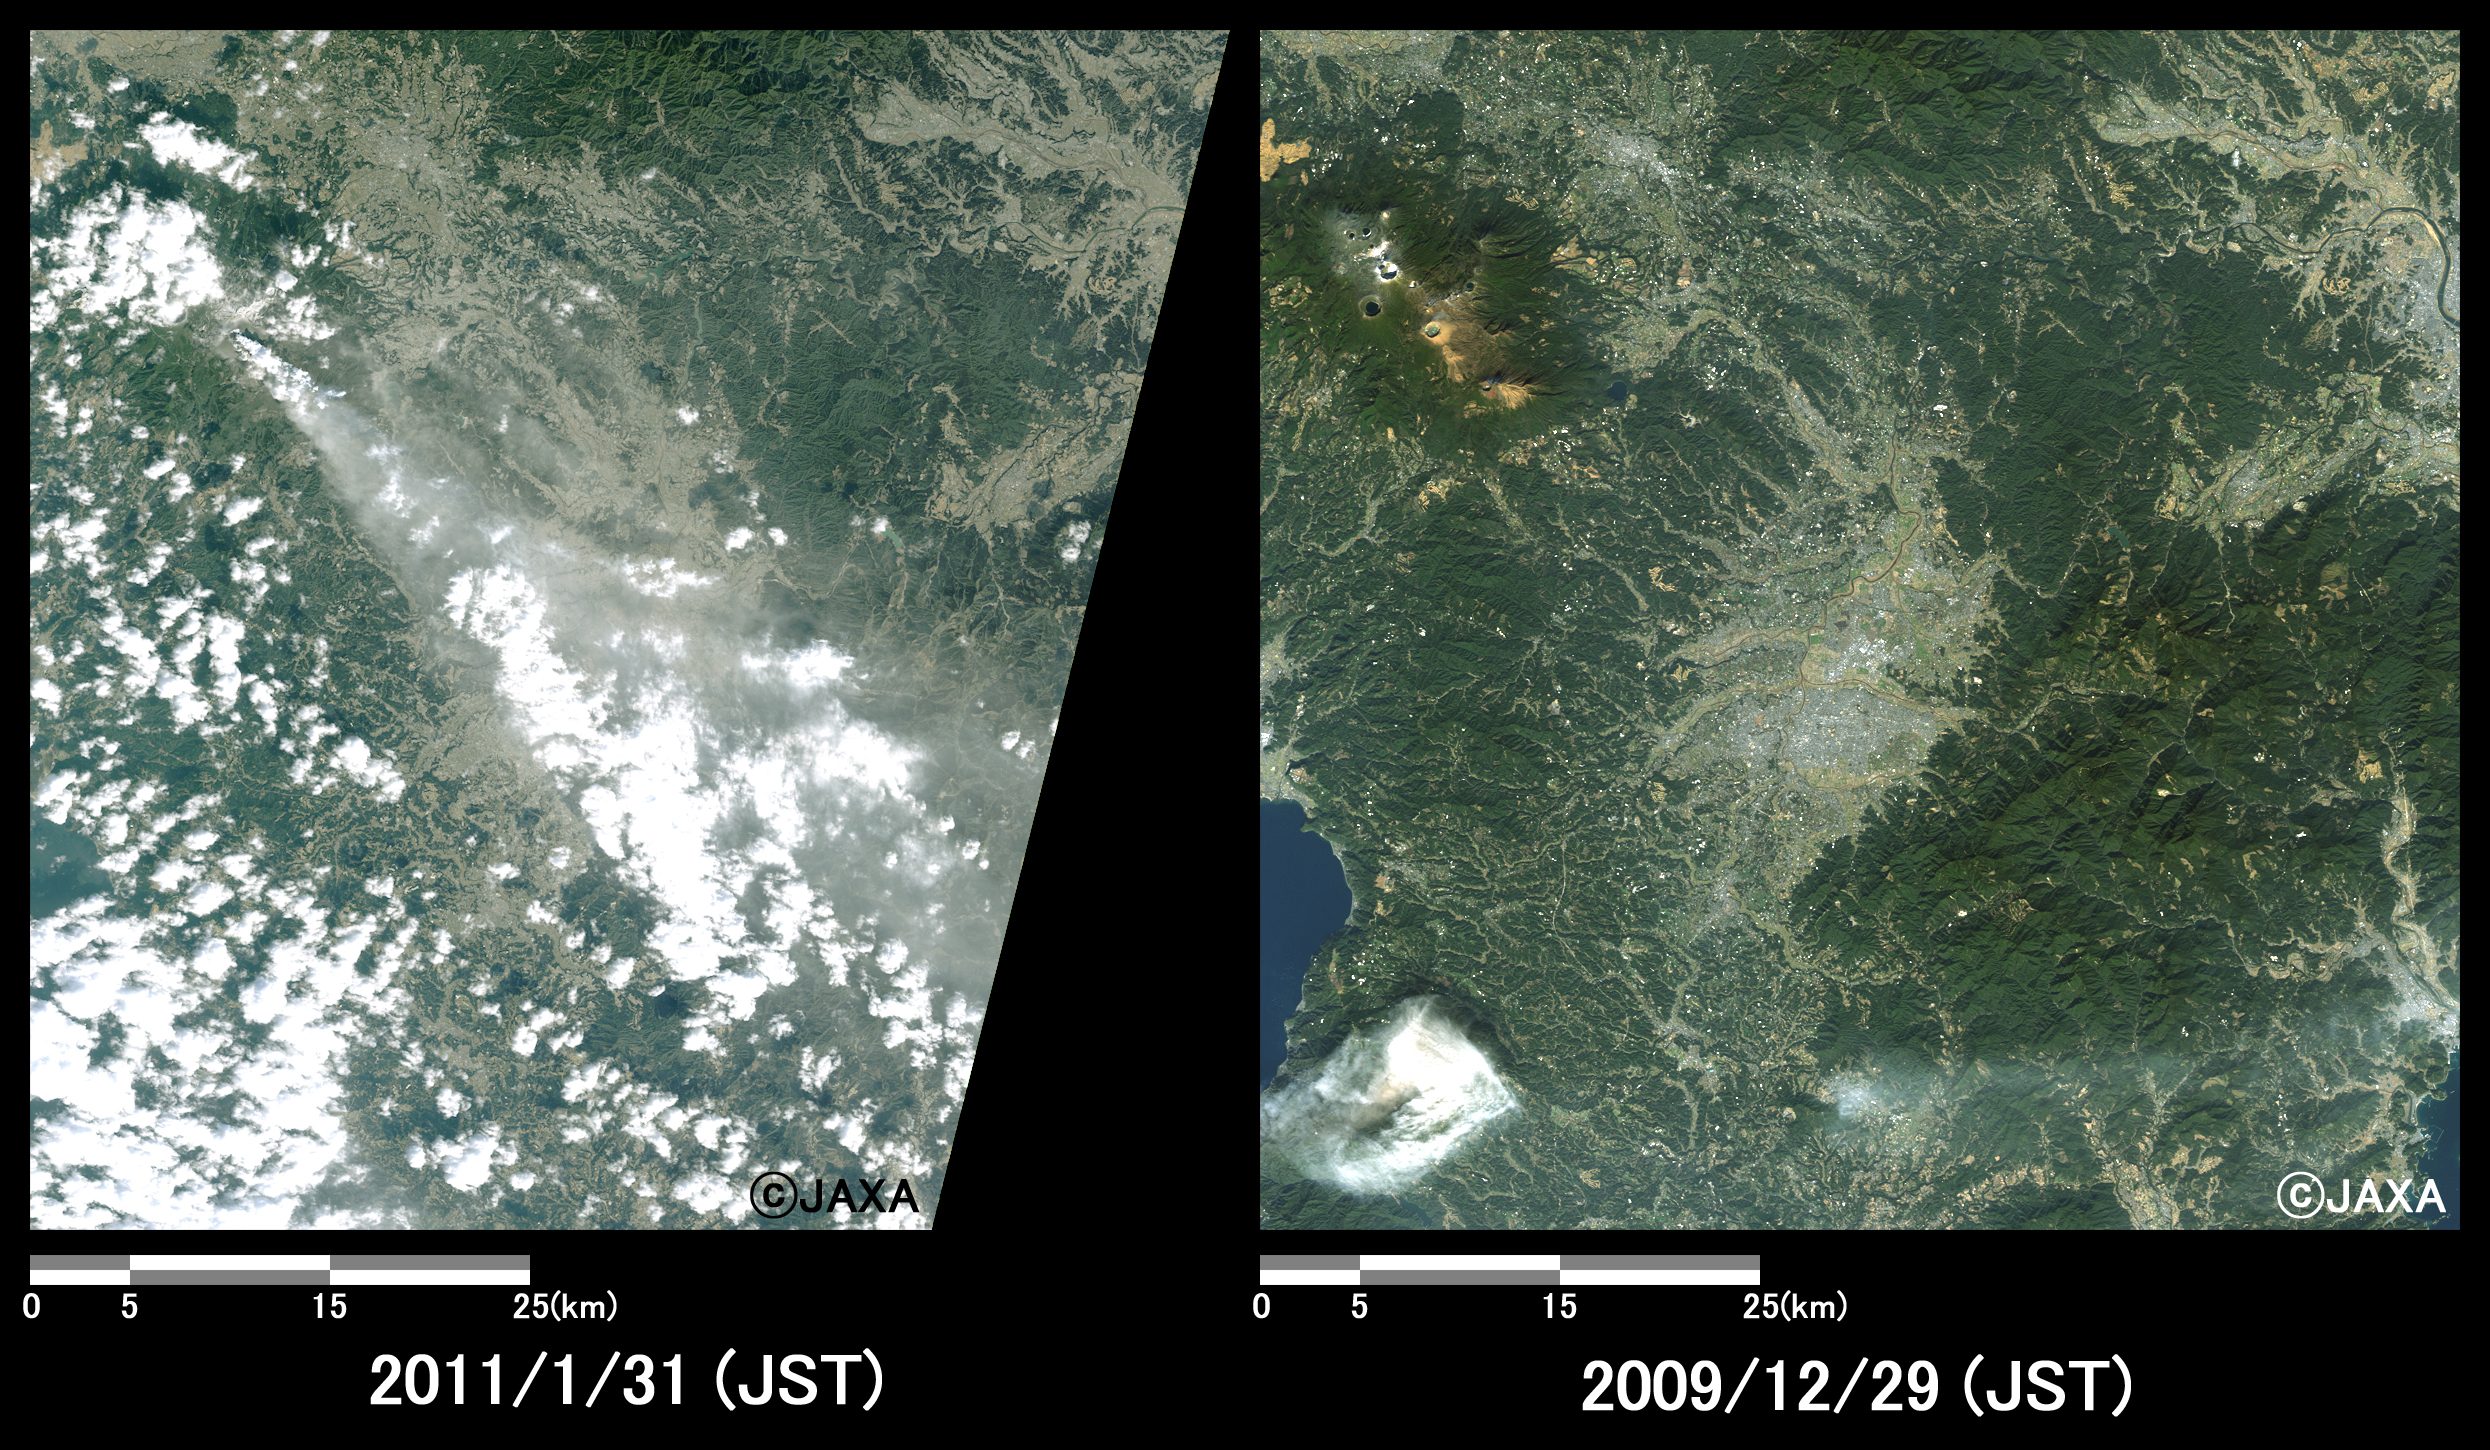 Fig. 2-1: Enlarged images of Shinmoedake peak. (3600 square kilometers, left: January 31, 2011; and right: December 29, 2009).